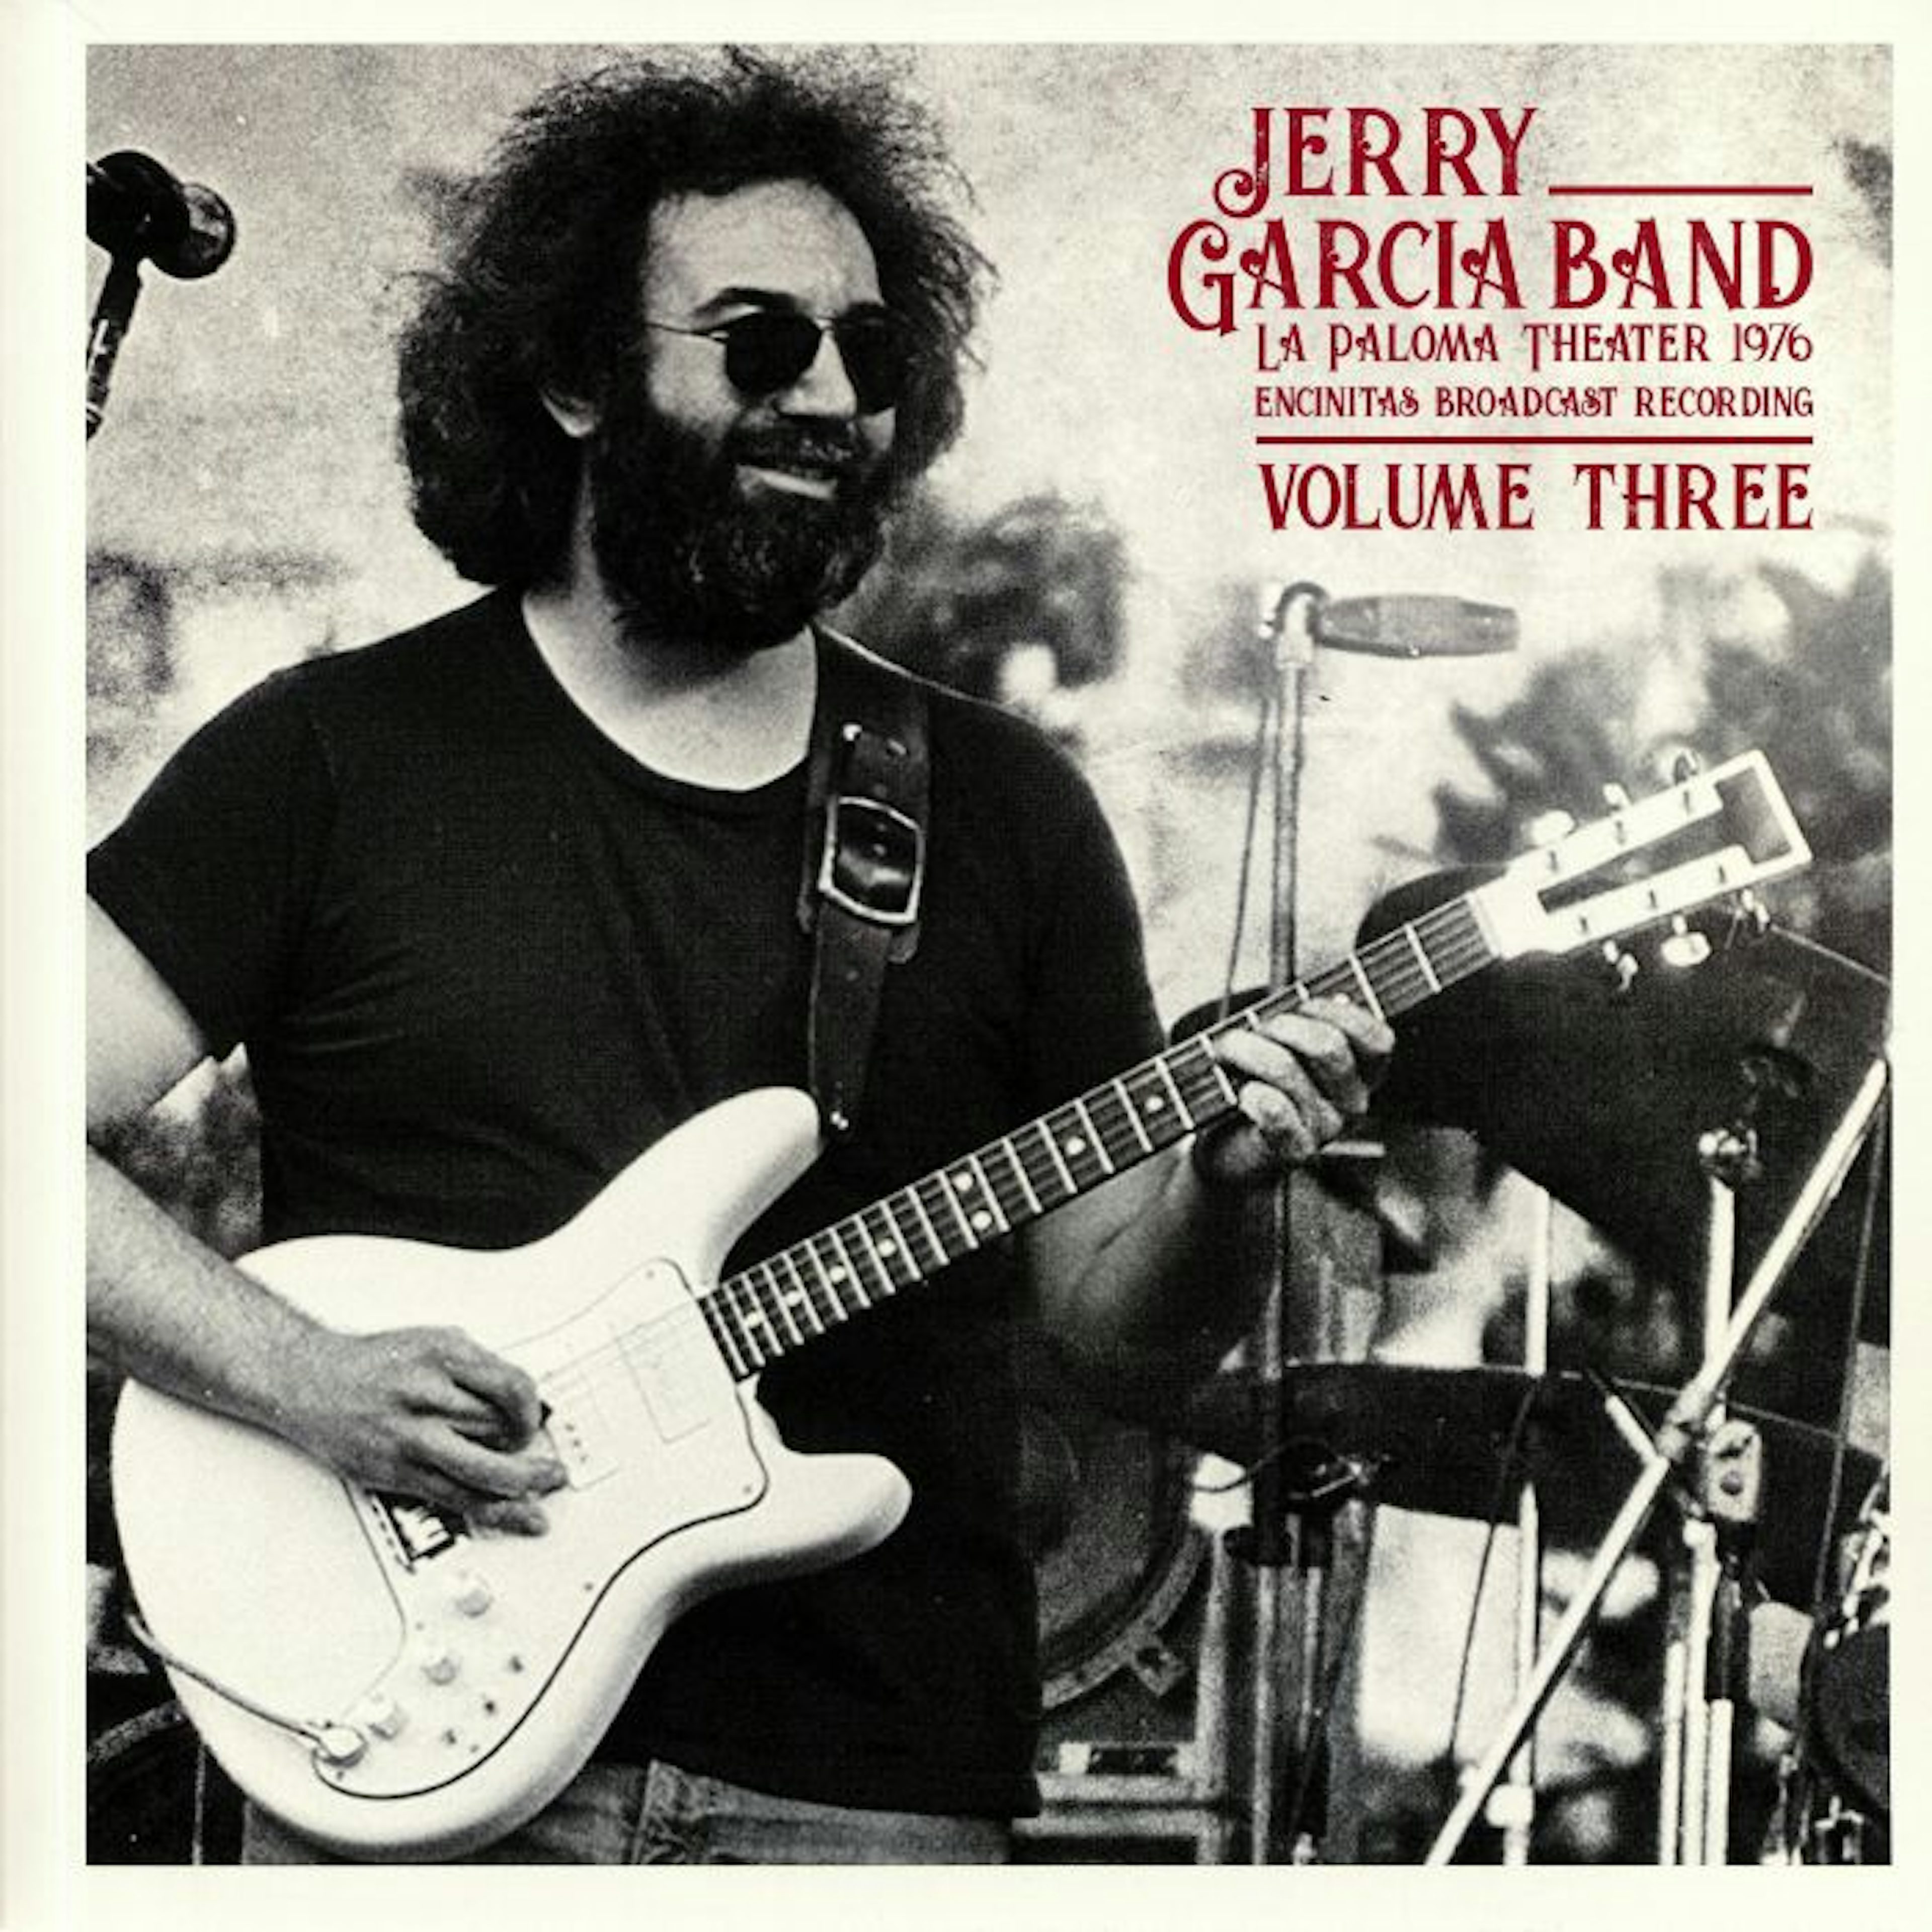 Jerry Garcia Band LP La Paloma Theater Vol. 3